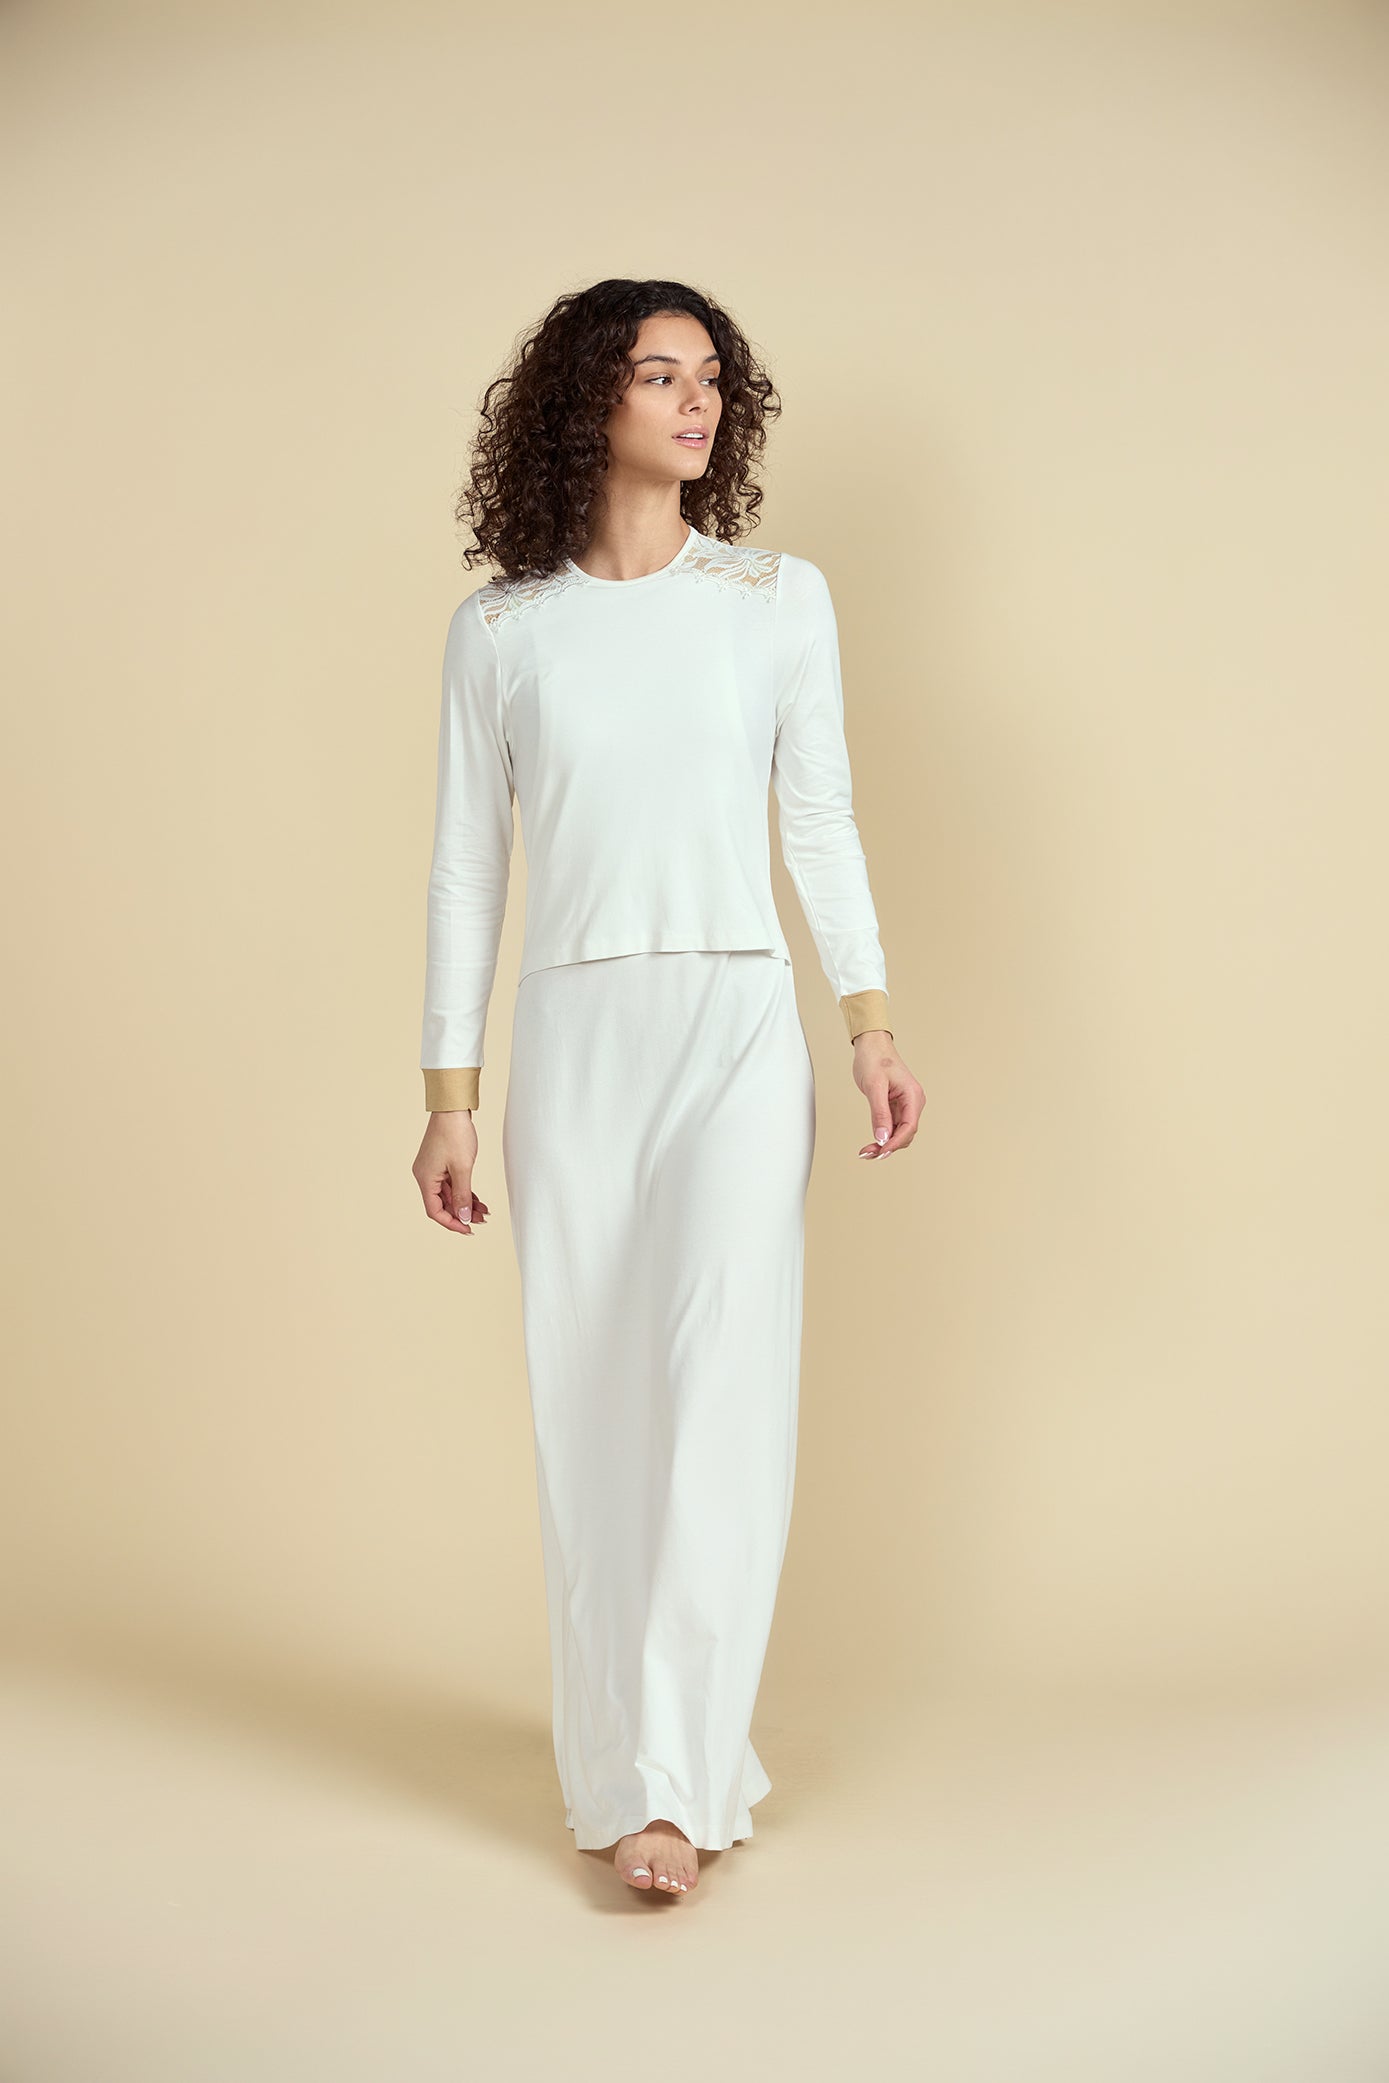 White Lace Trim Nursing Nightgown